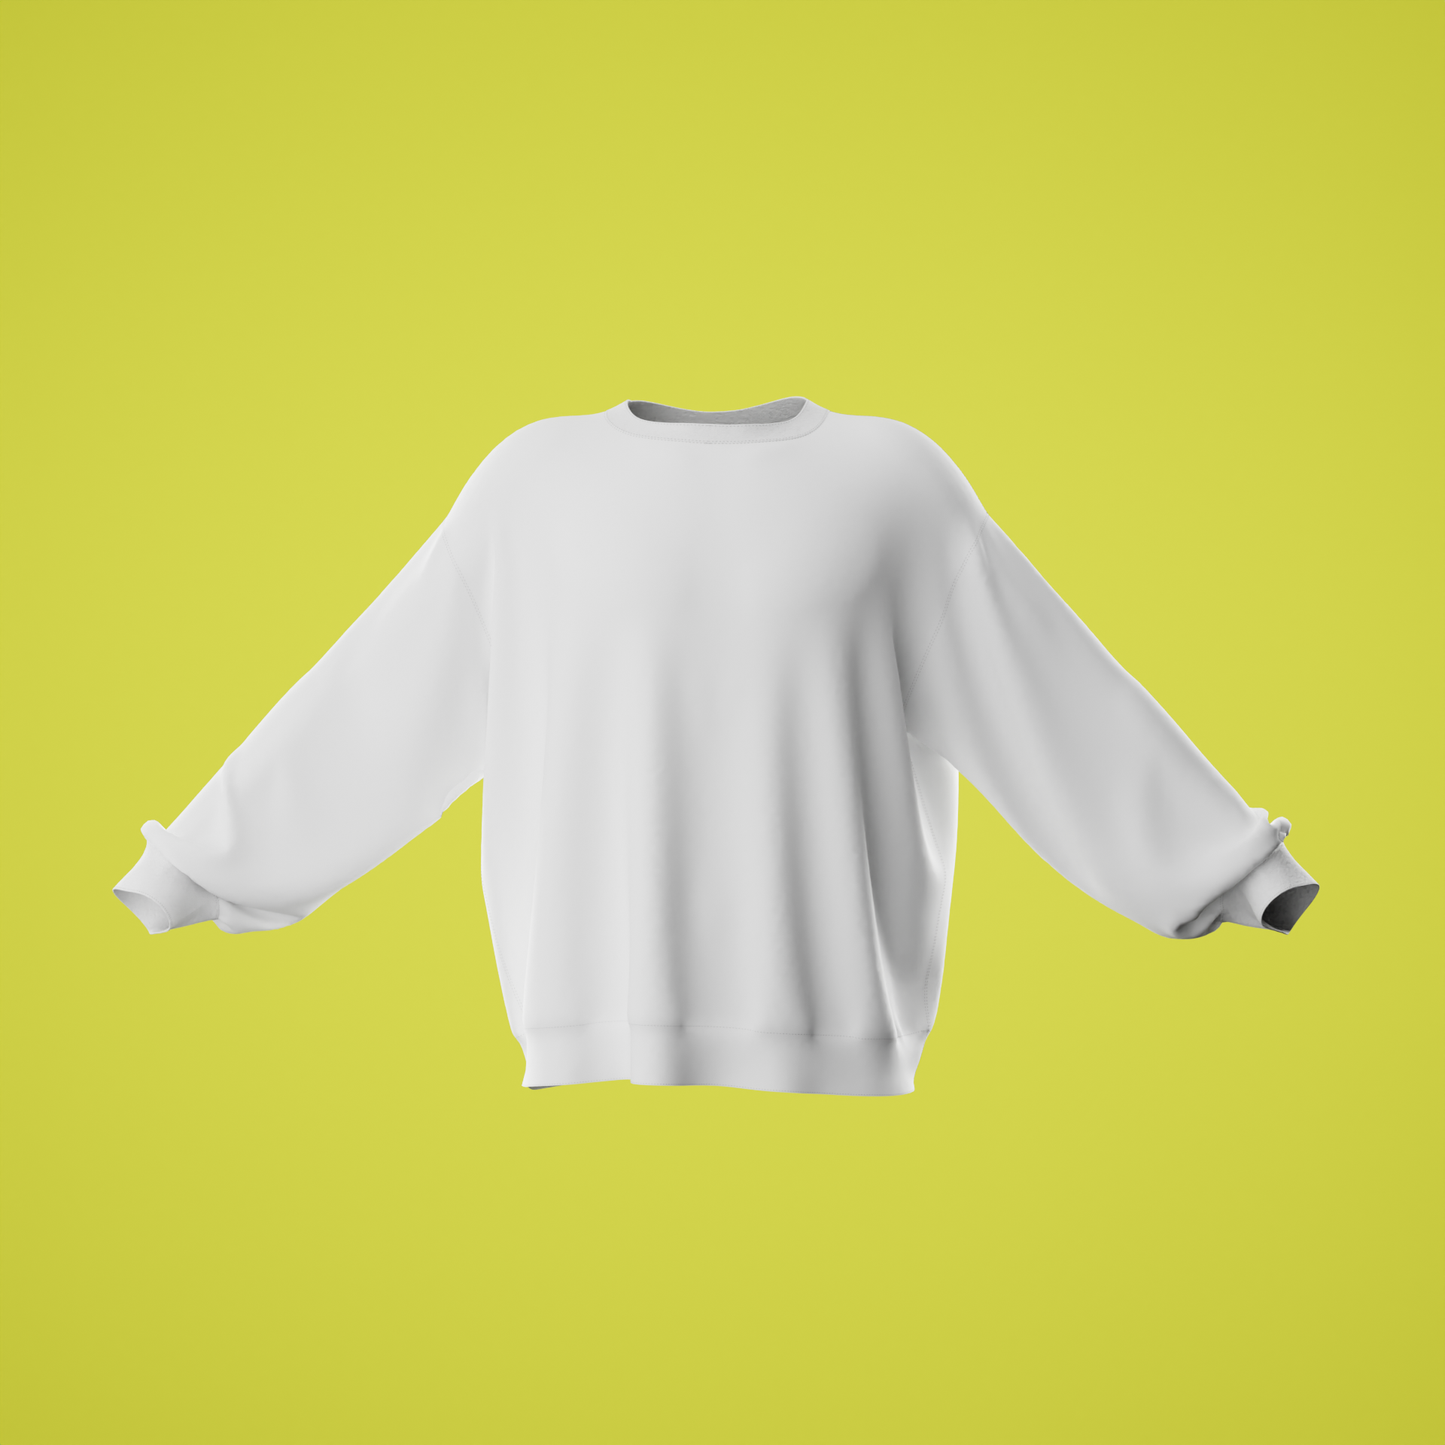 Oversized/Regular Long Sleeve T-shirt - 3D Mockup